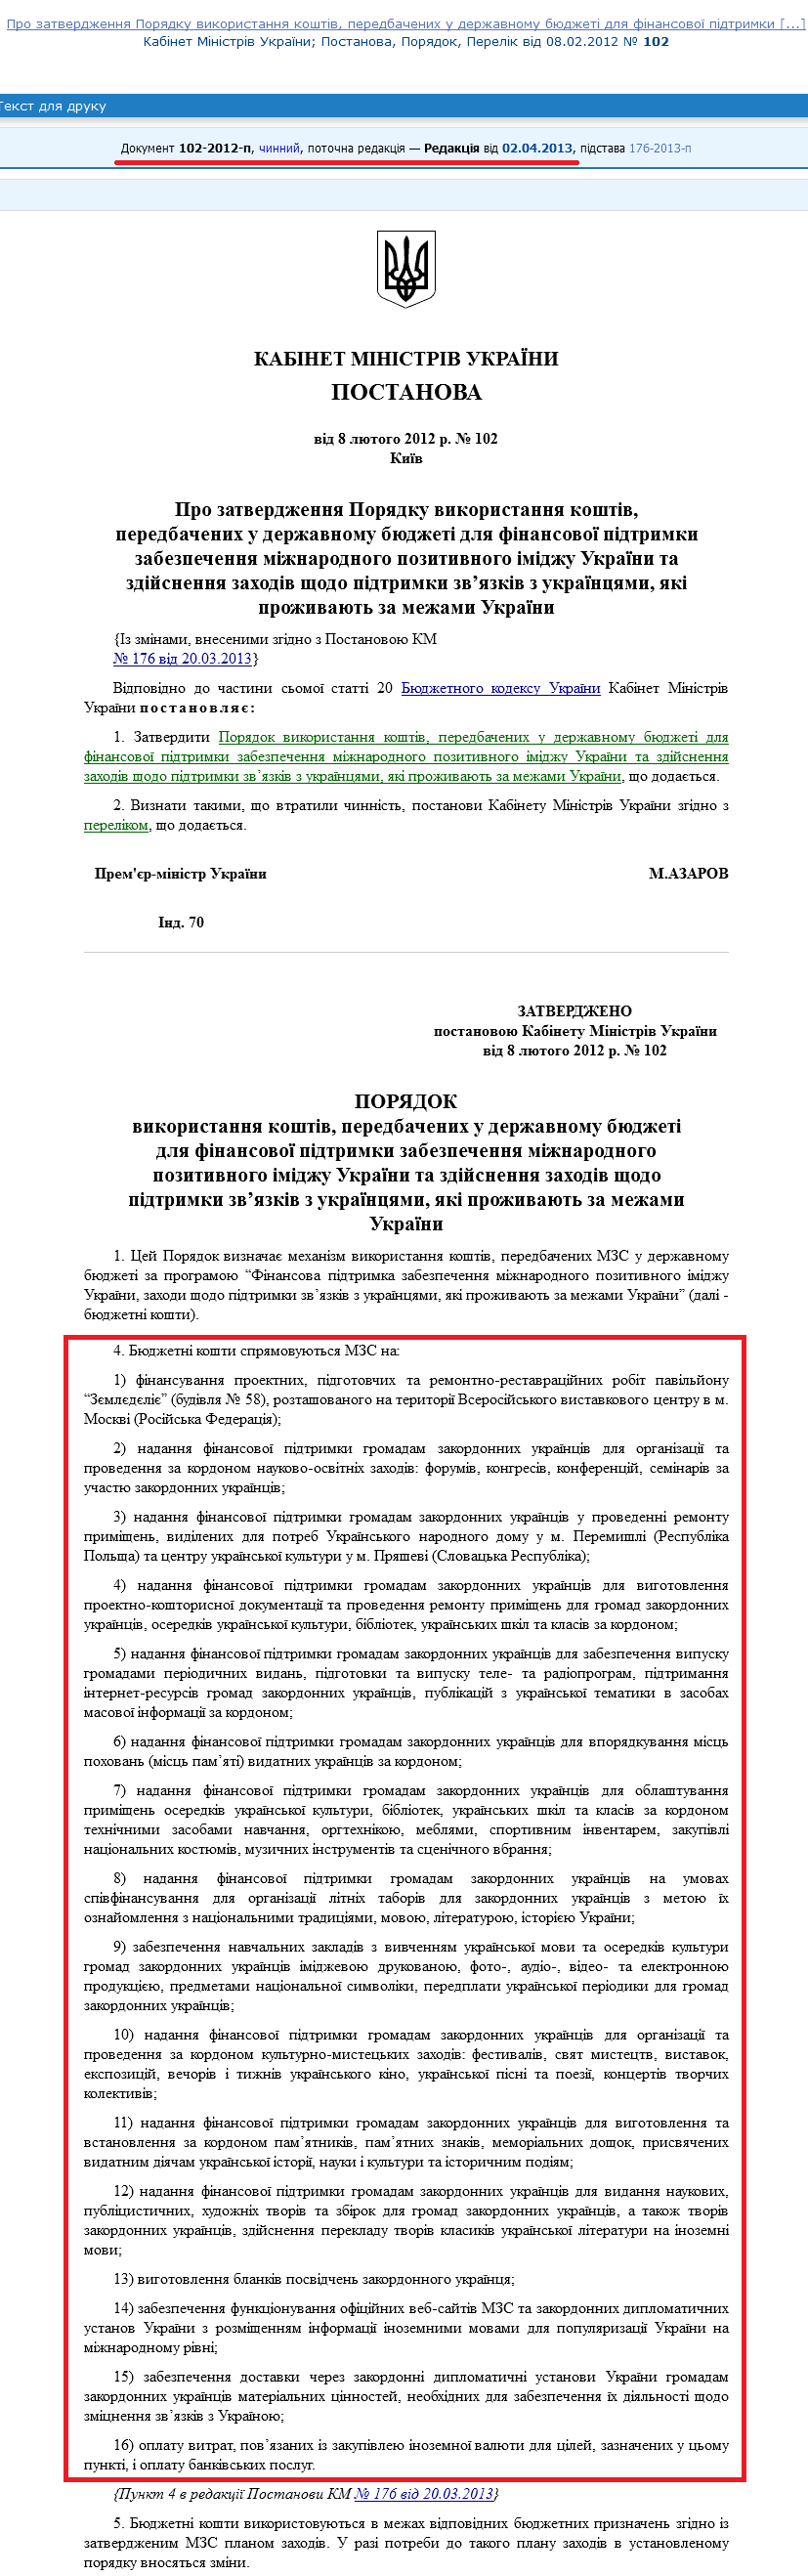 http://zakon2.rada.gov.ua/laws/show/102-2012-%D0%BF/ed20130402